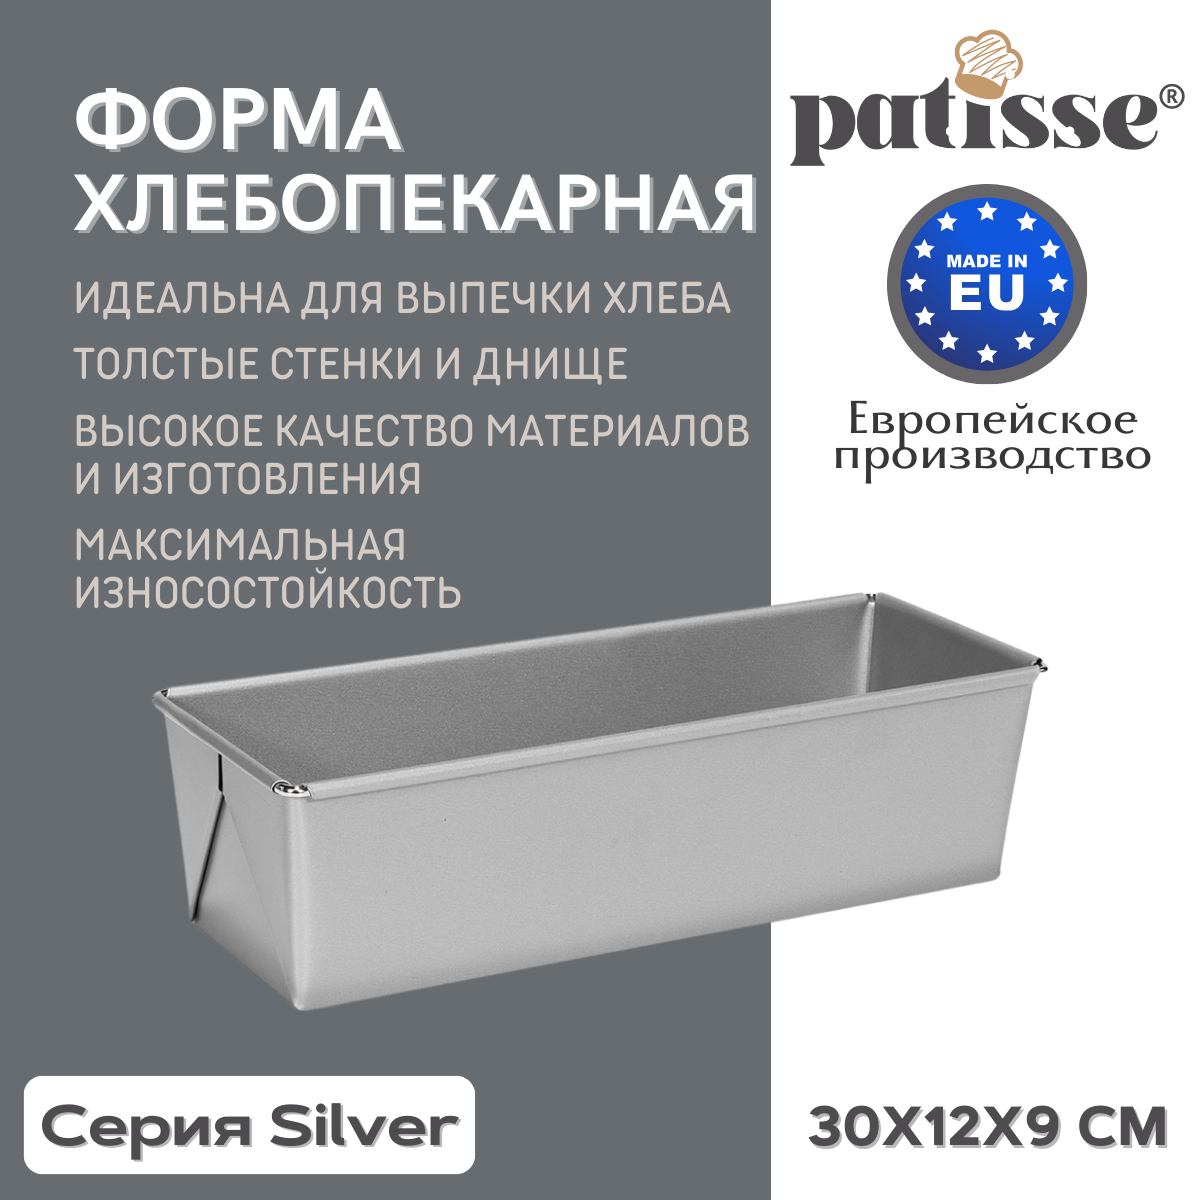 Форма хлебопекарная Patisse Silver 30х12х9 см